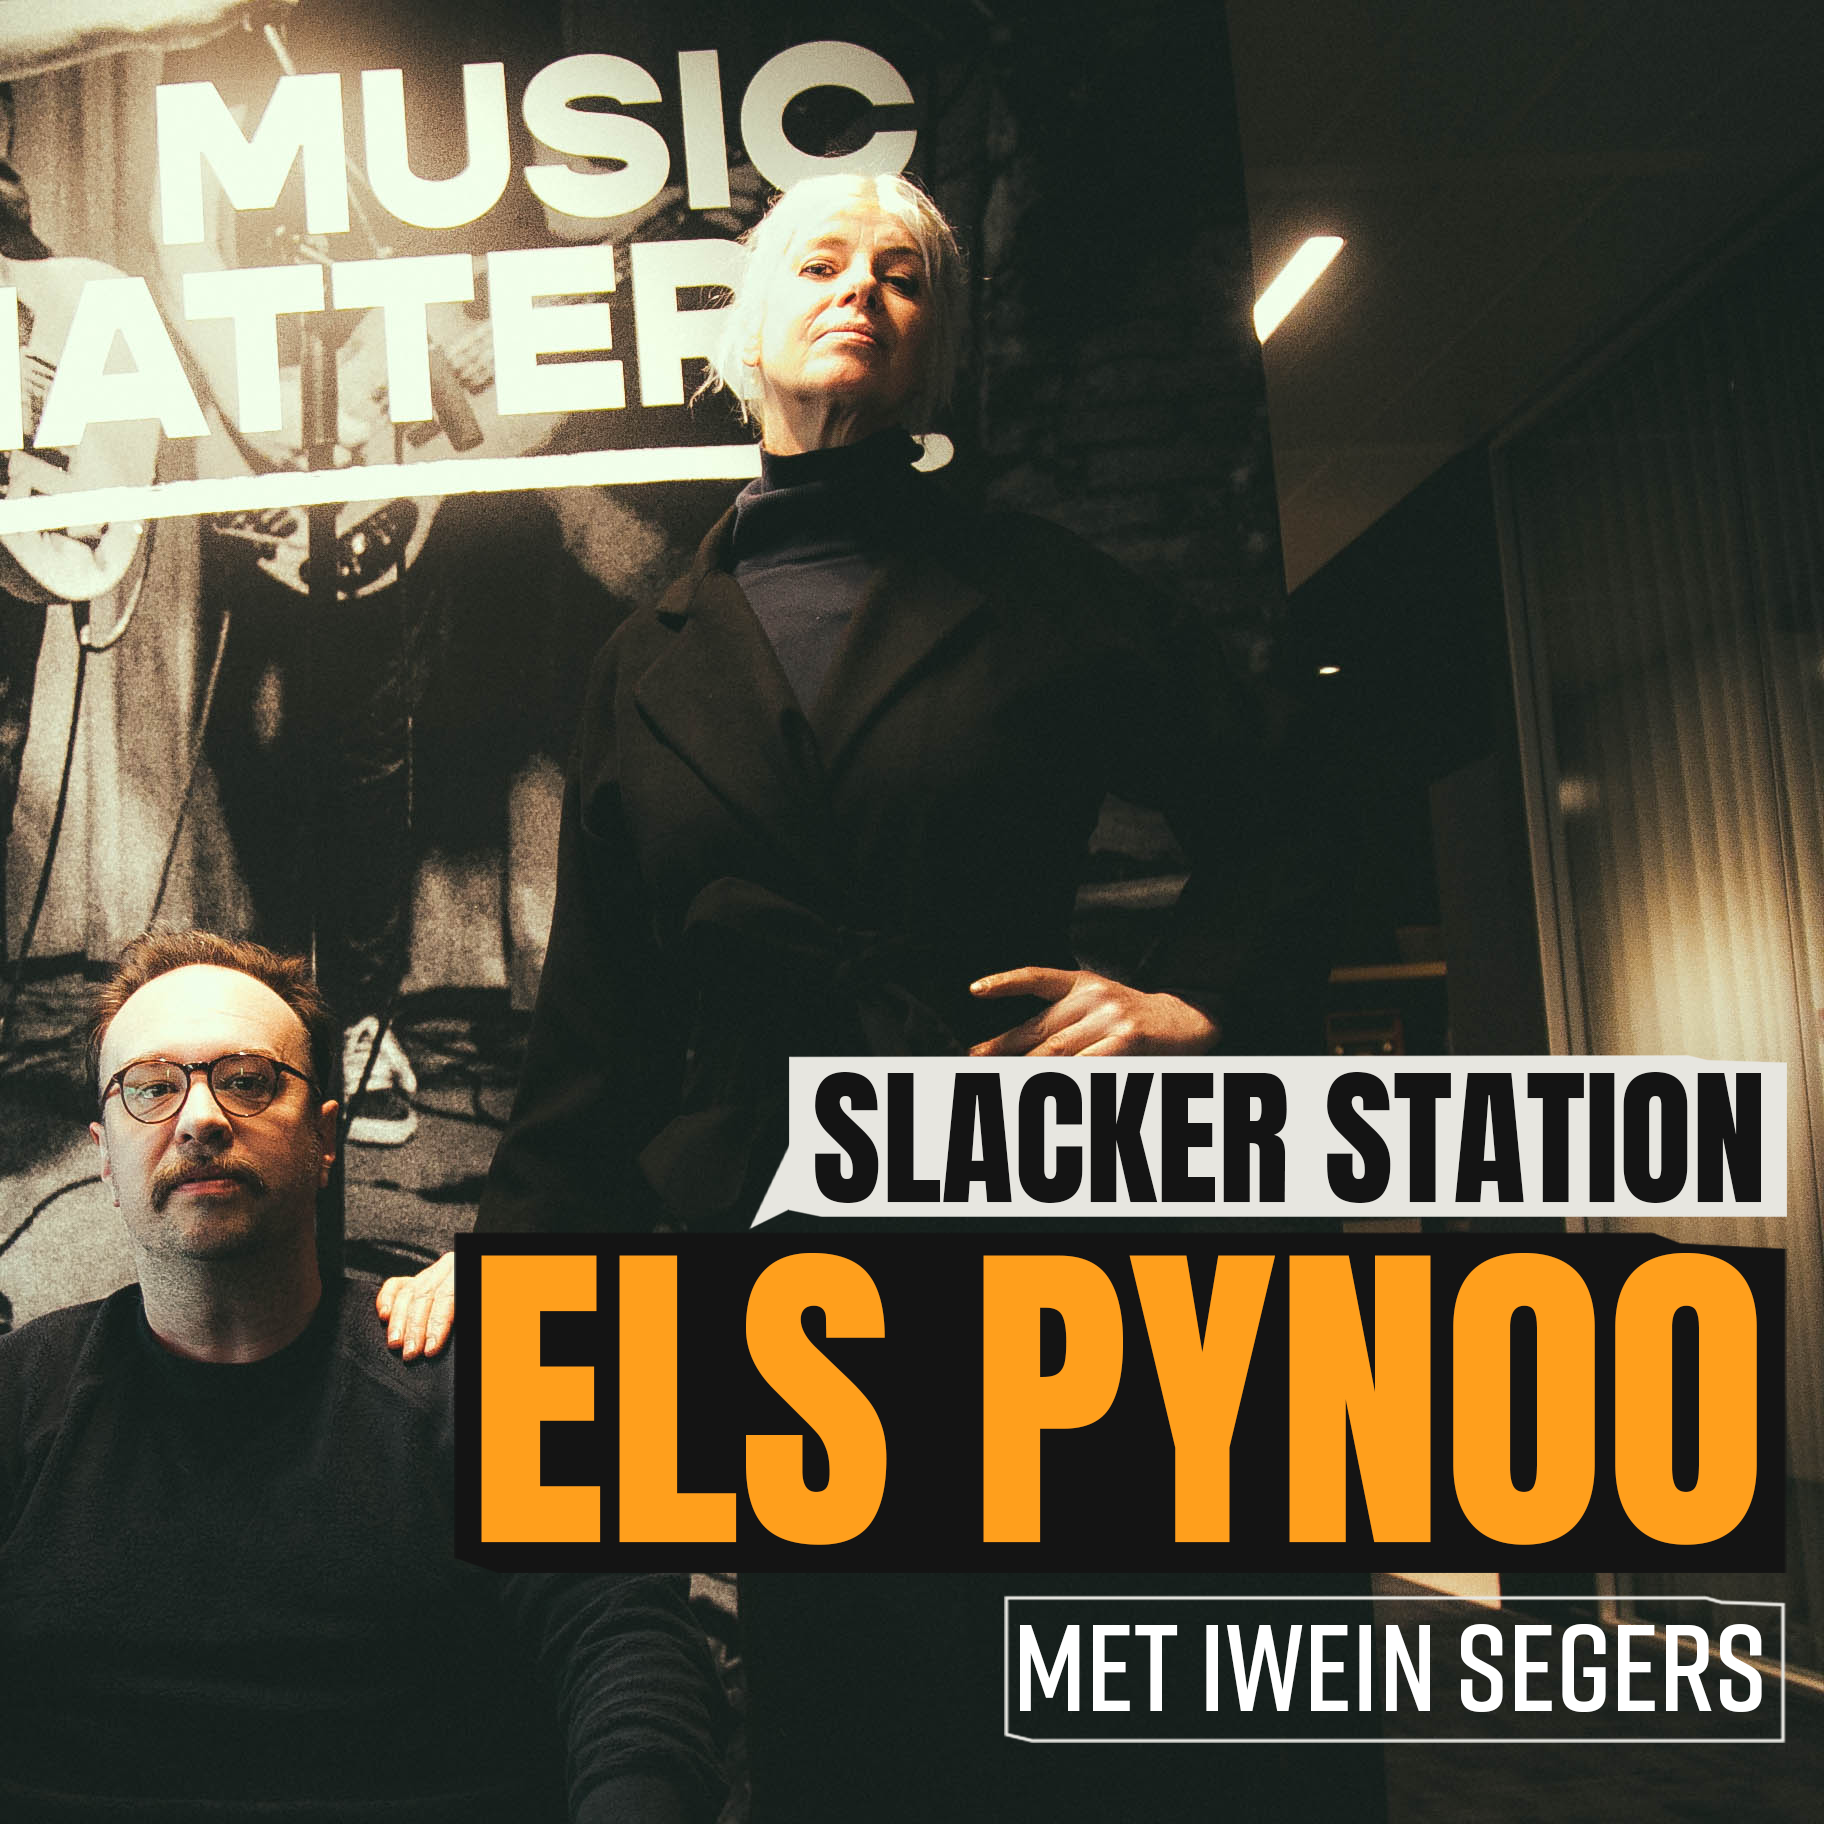 Slacker station met els pynoo